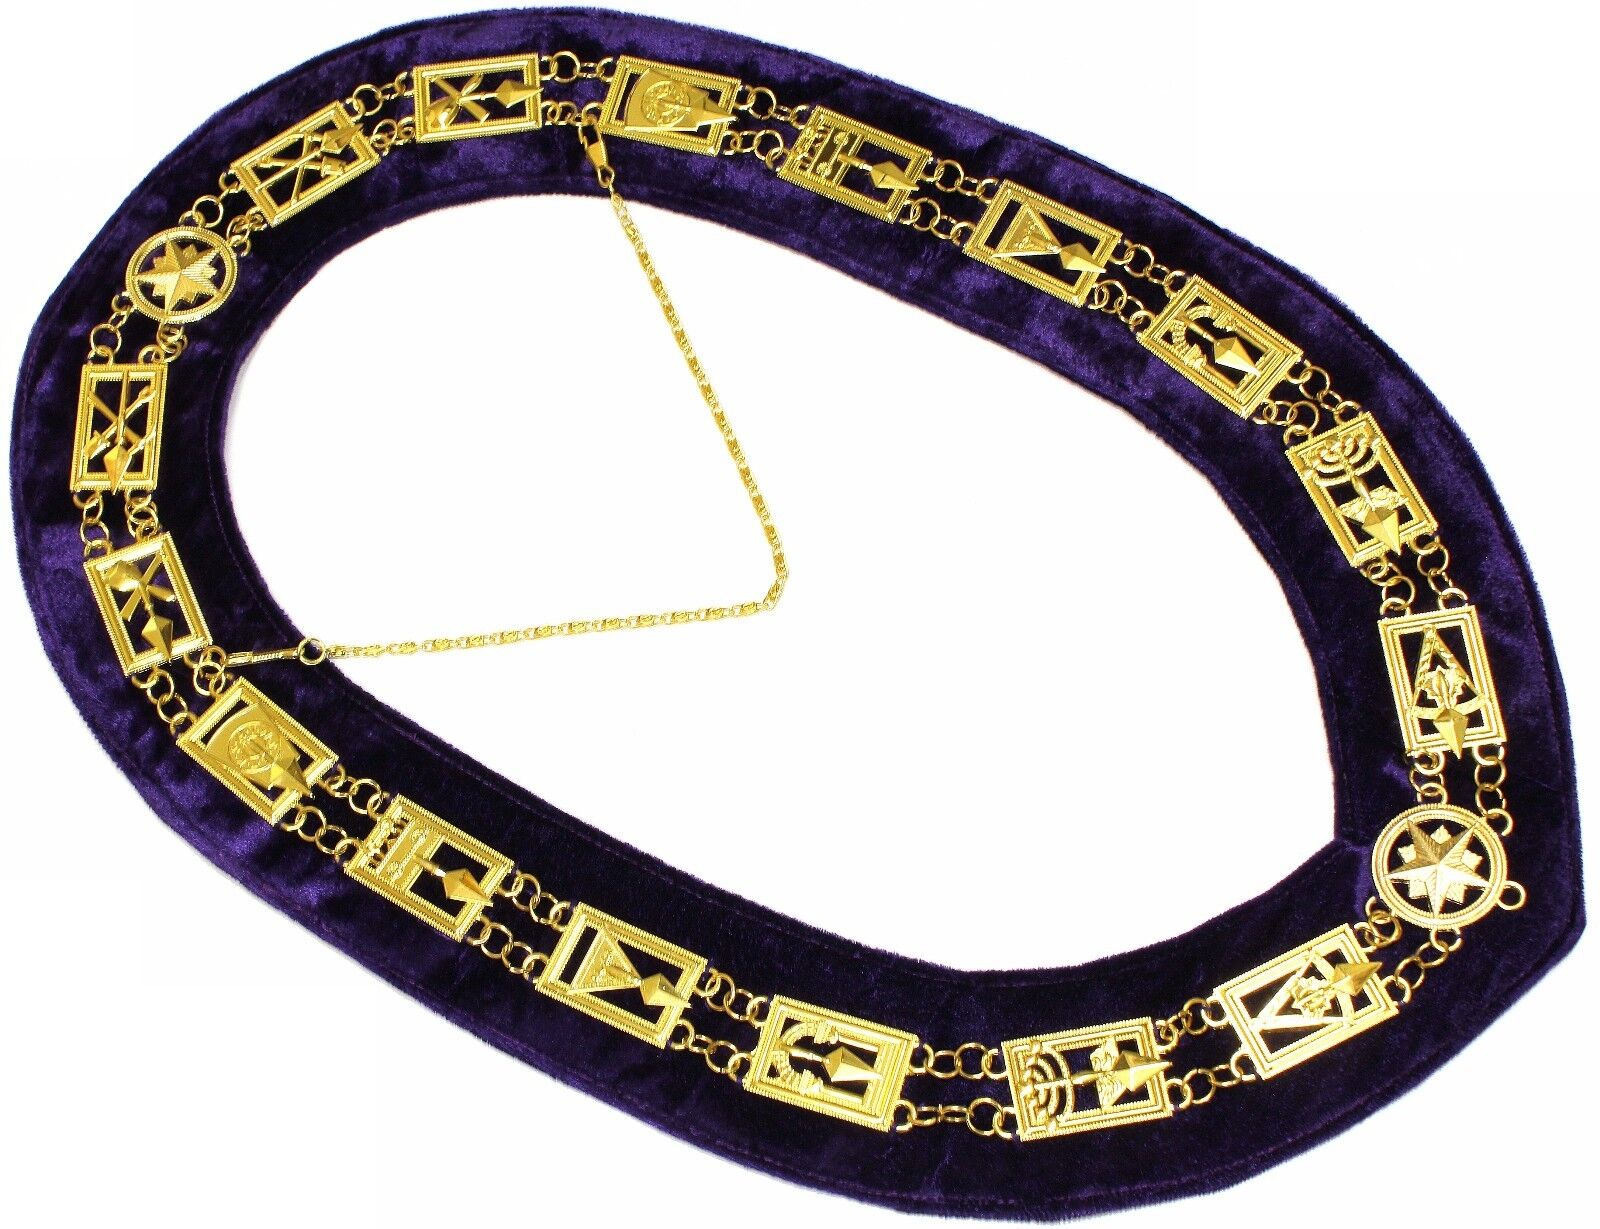 Cryptic Mason Royal & Select Master Chain Collar Regalia PURPLE Backing DMR800GP